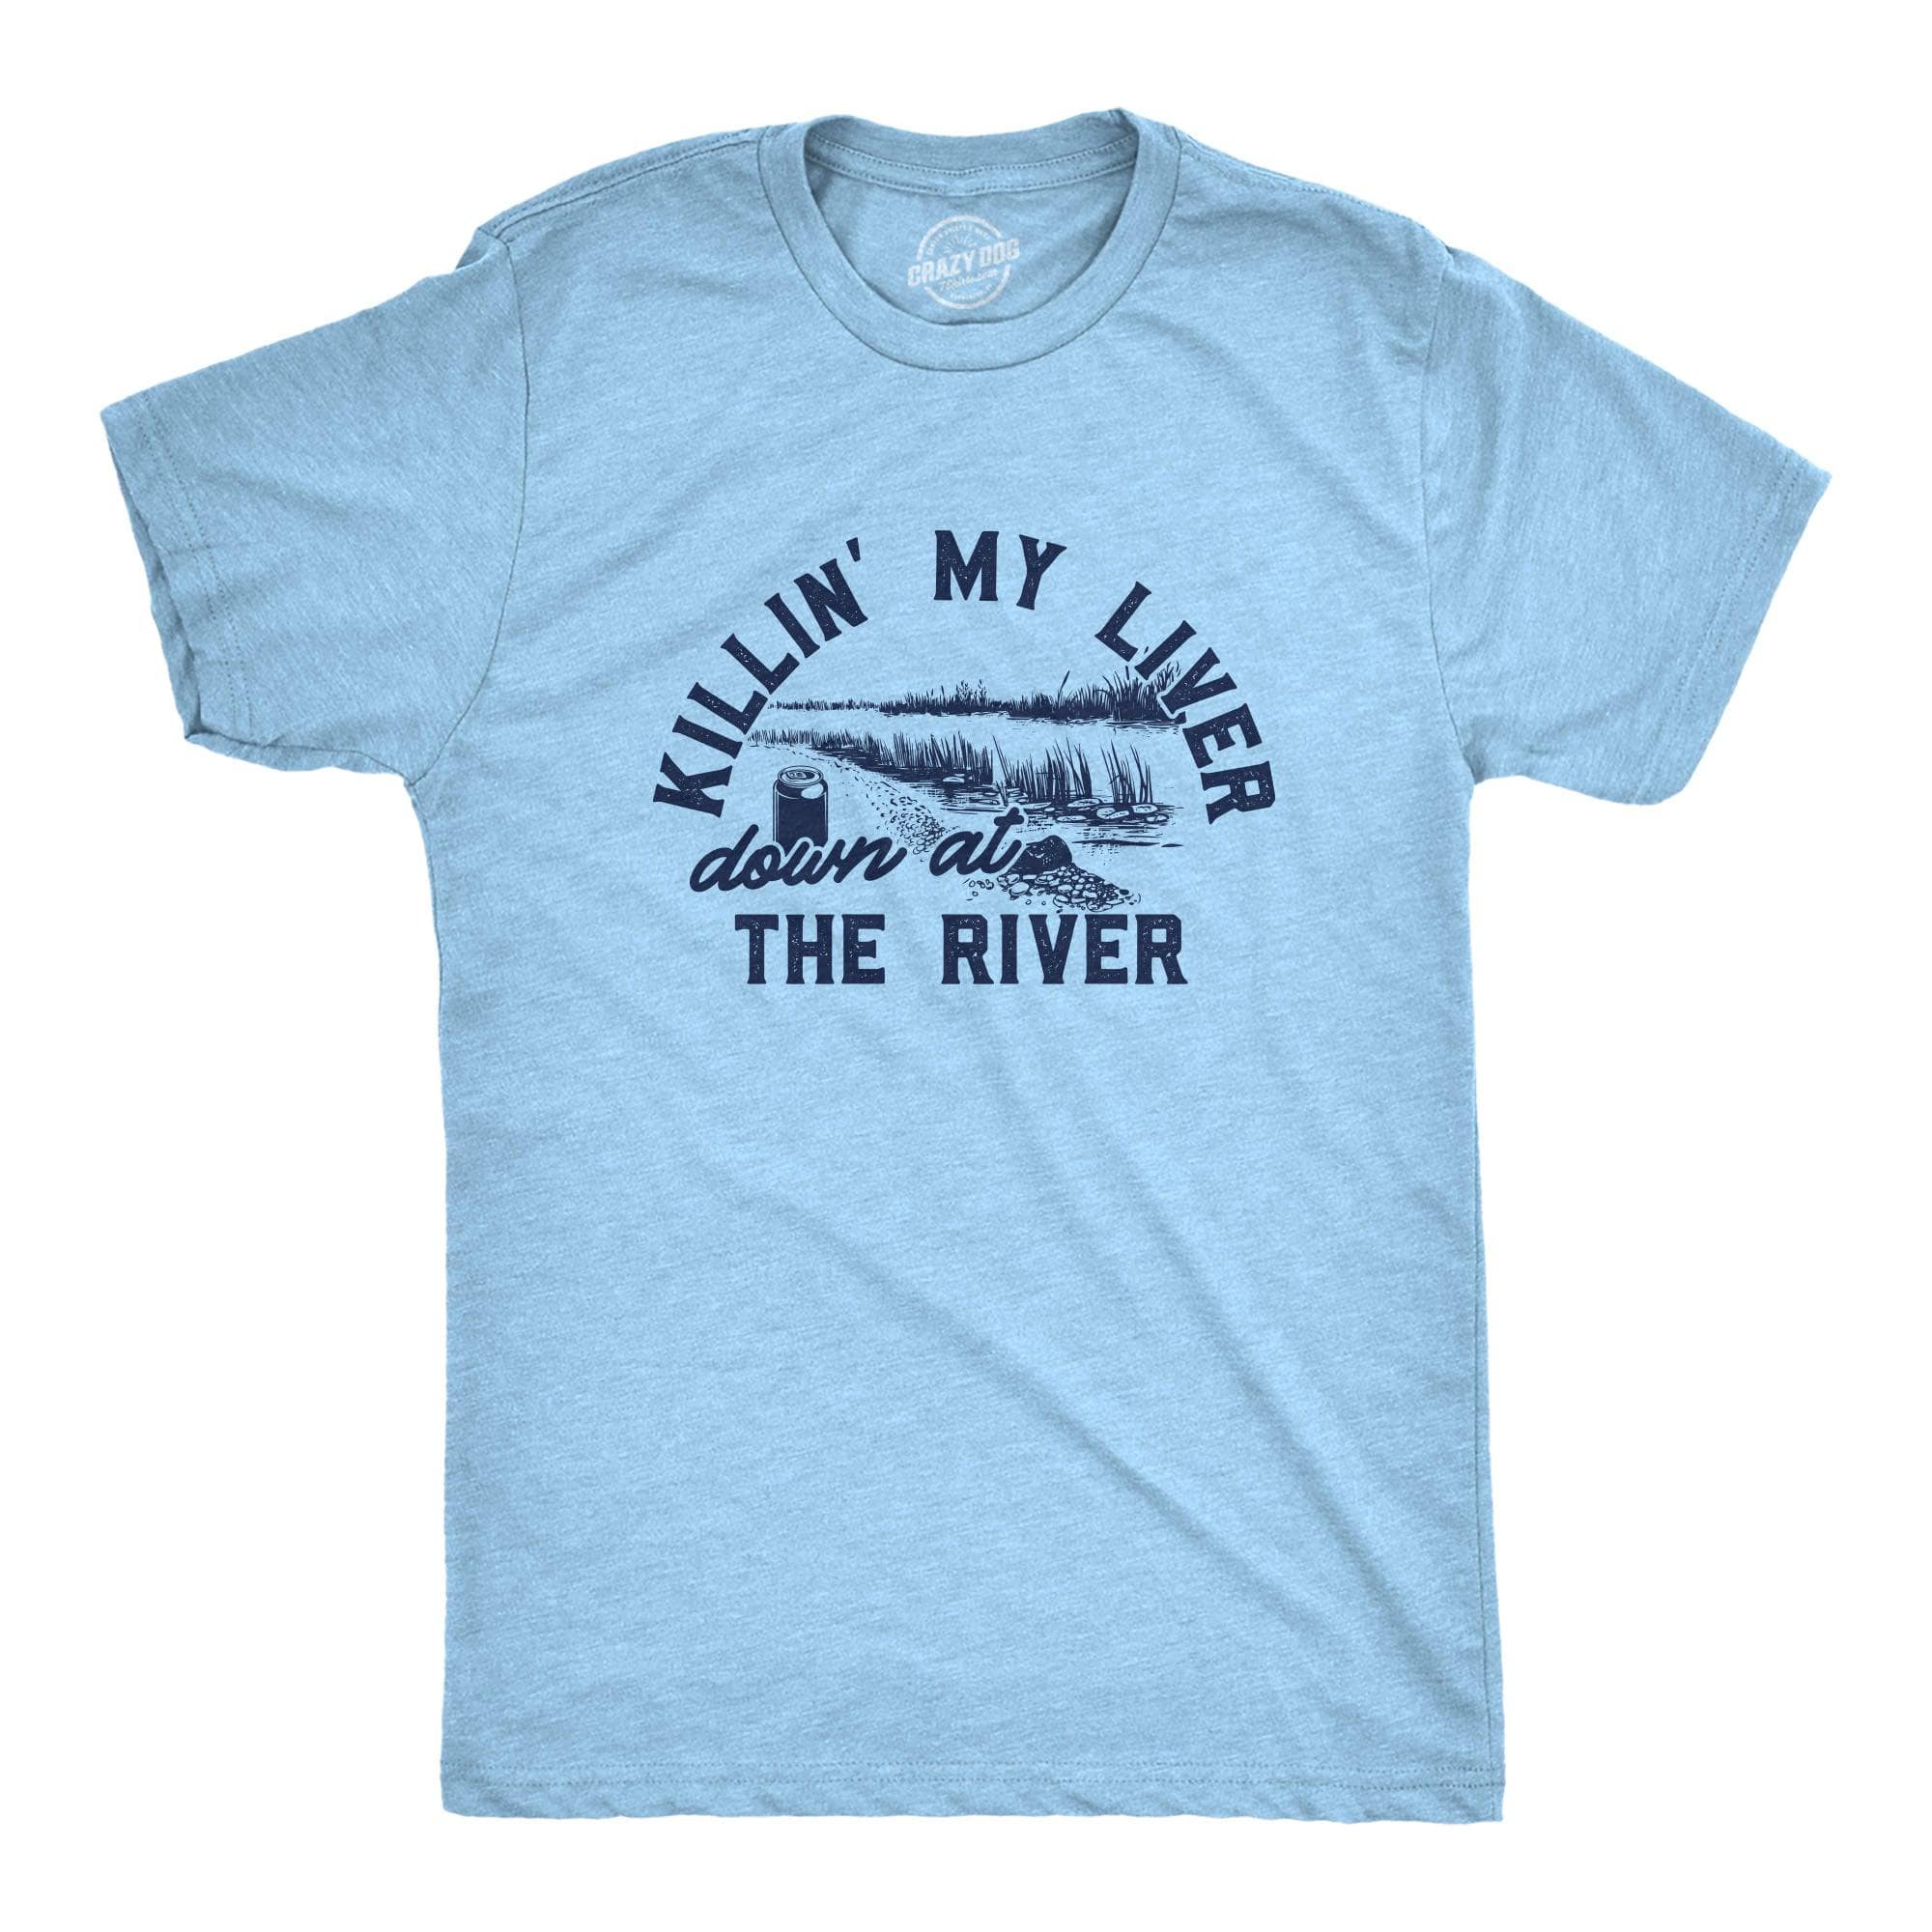 Killin My Liver Down At The River Men's Tshirt  -  Crazy Dog T-Shirts